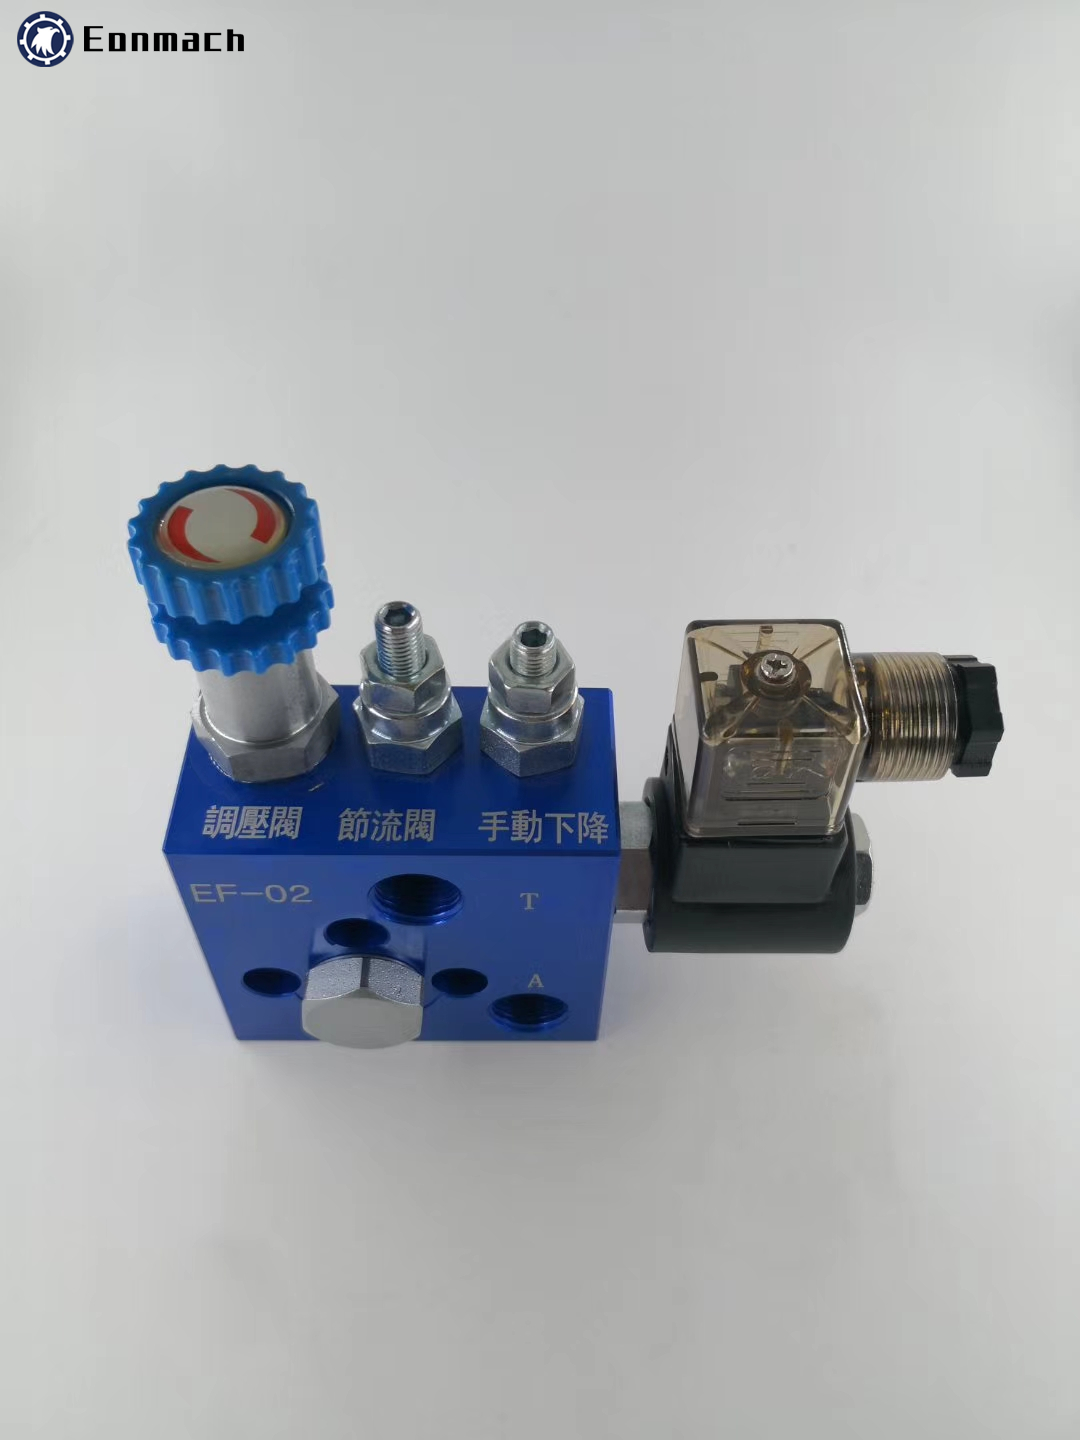 Hydraulic Pump Station Customize Various Non-standard Oil Circuit Block Lifting Platform Double Solenoid